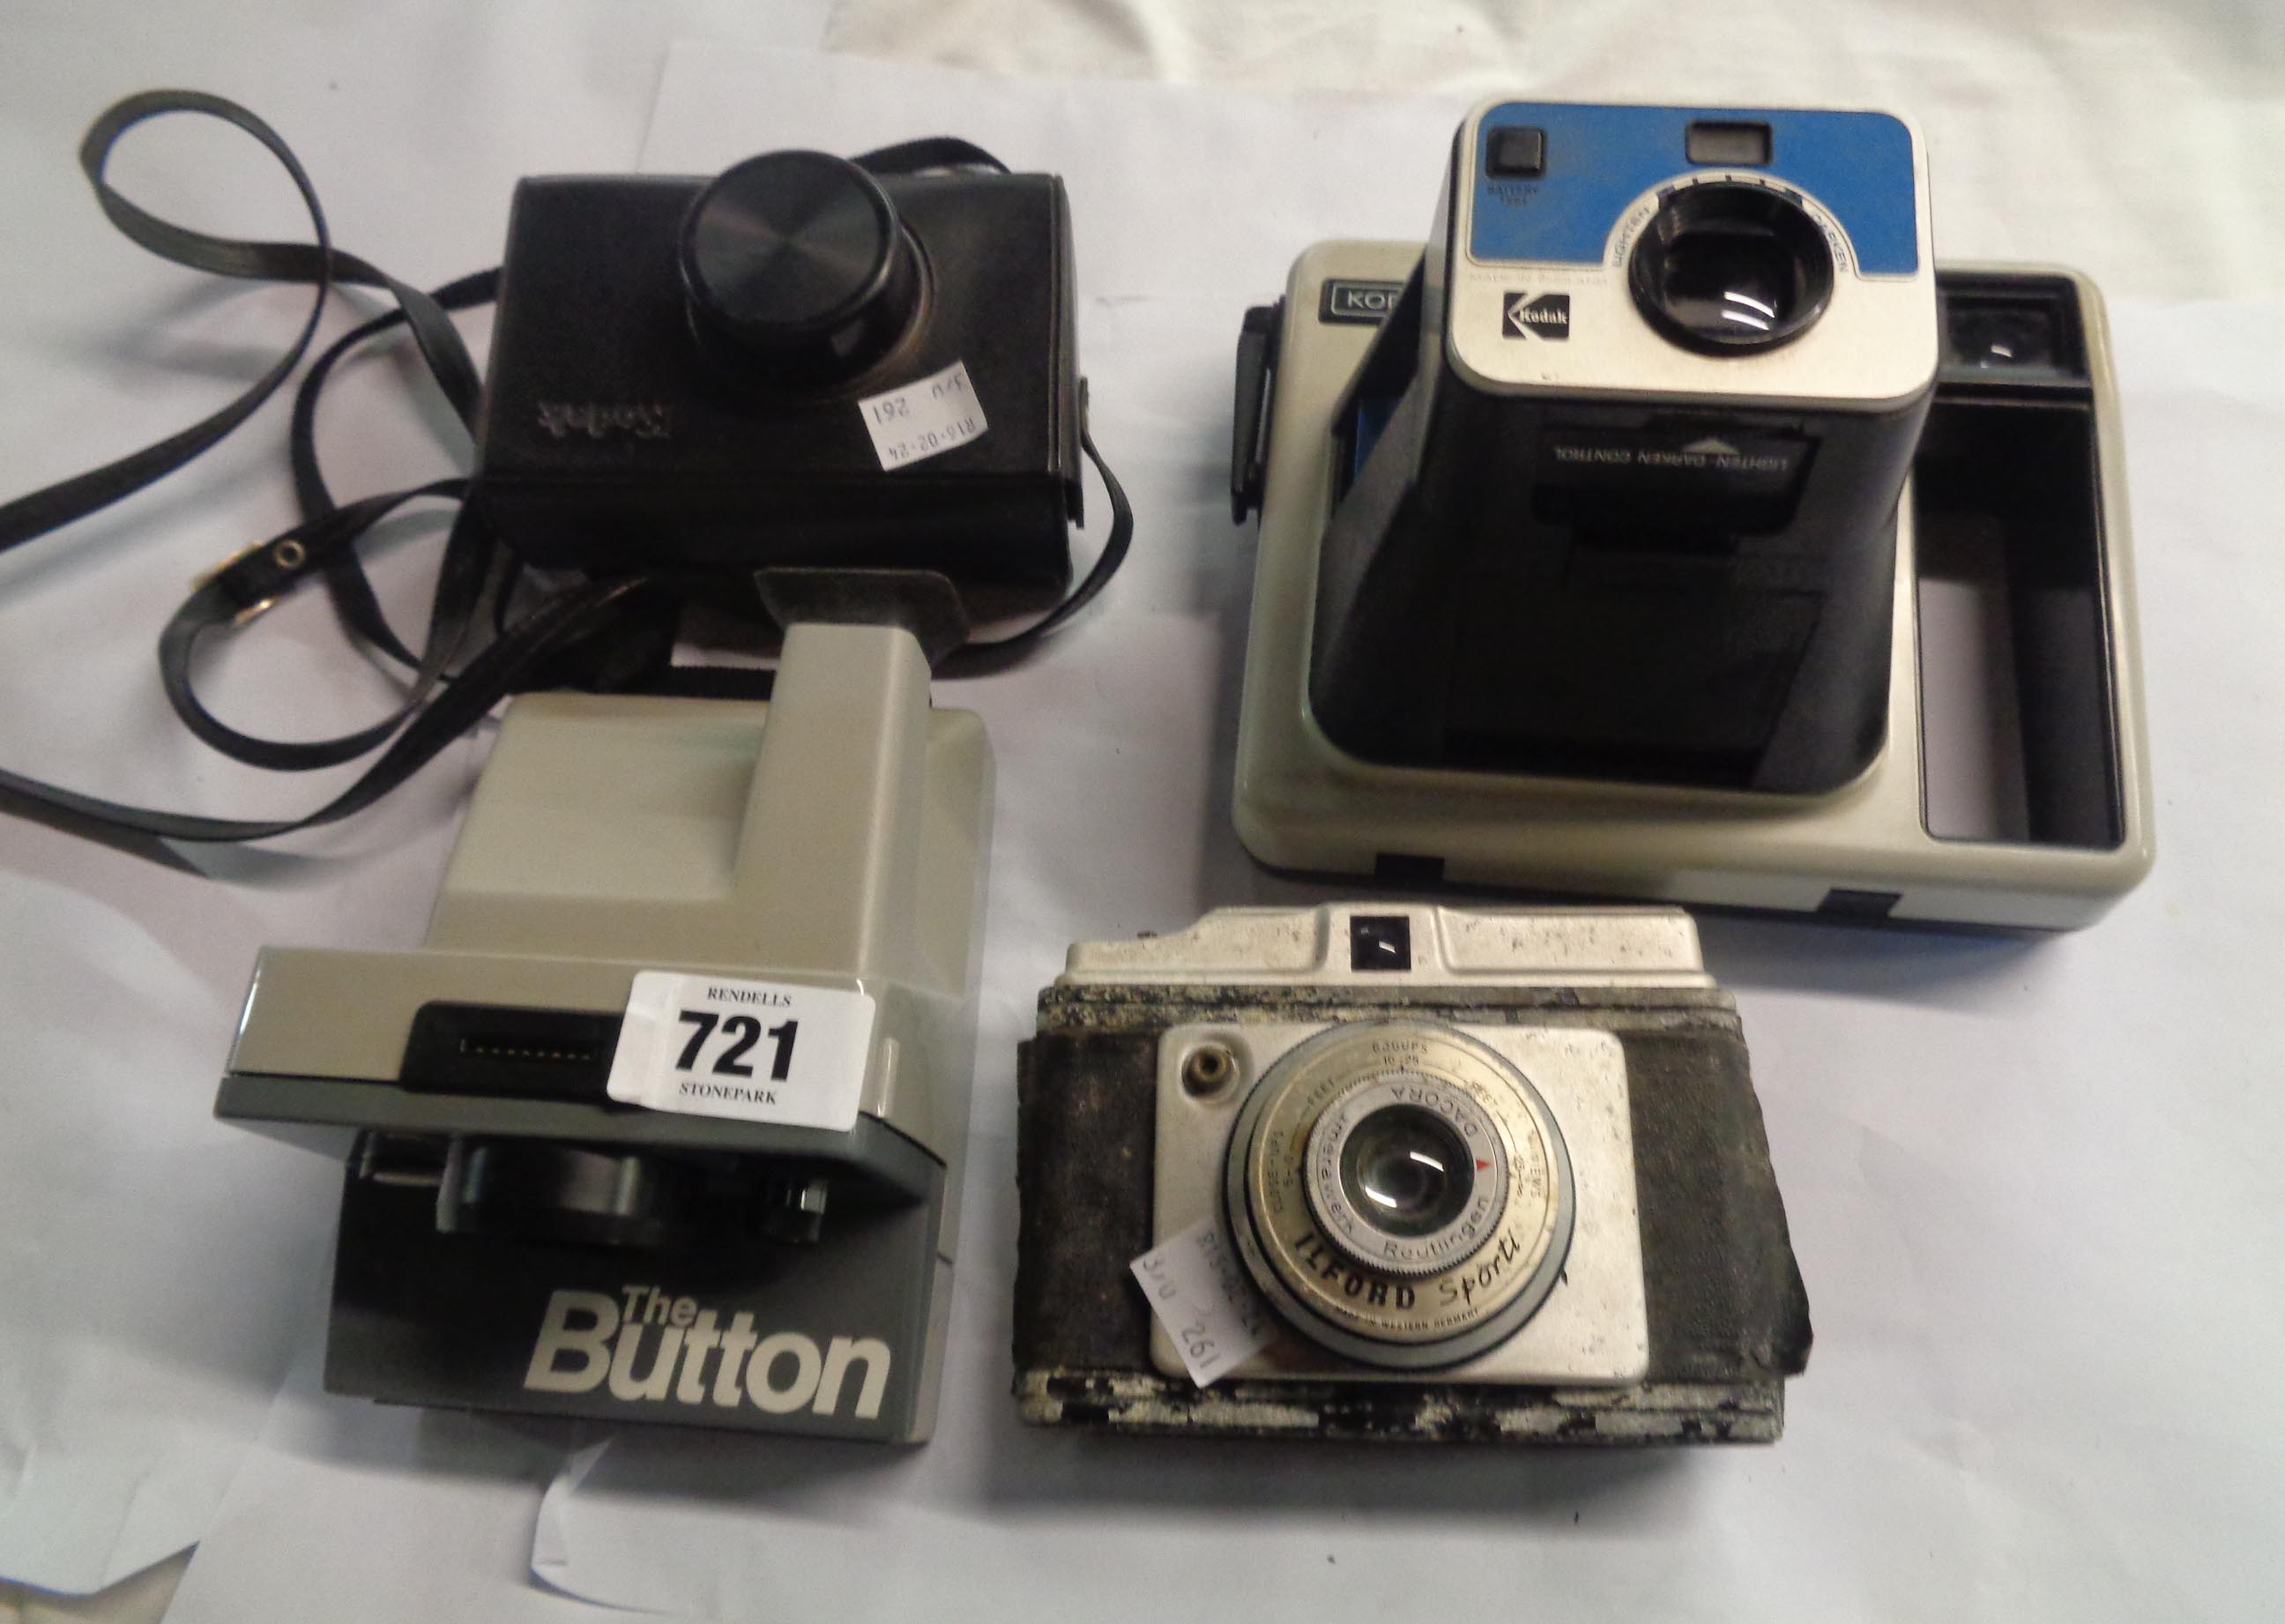 A Kodak Instamatic 233 Camera in original case, a Polaroid Land Camera 'The Button', another